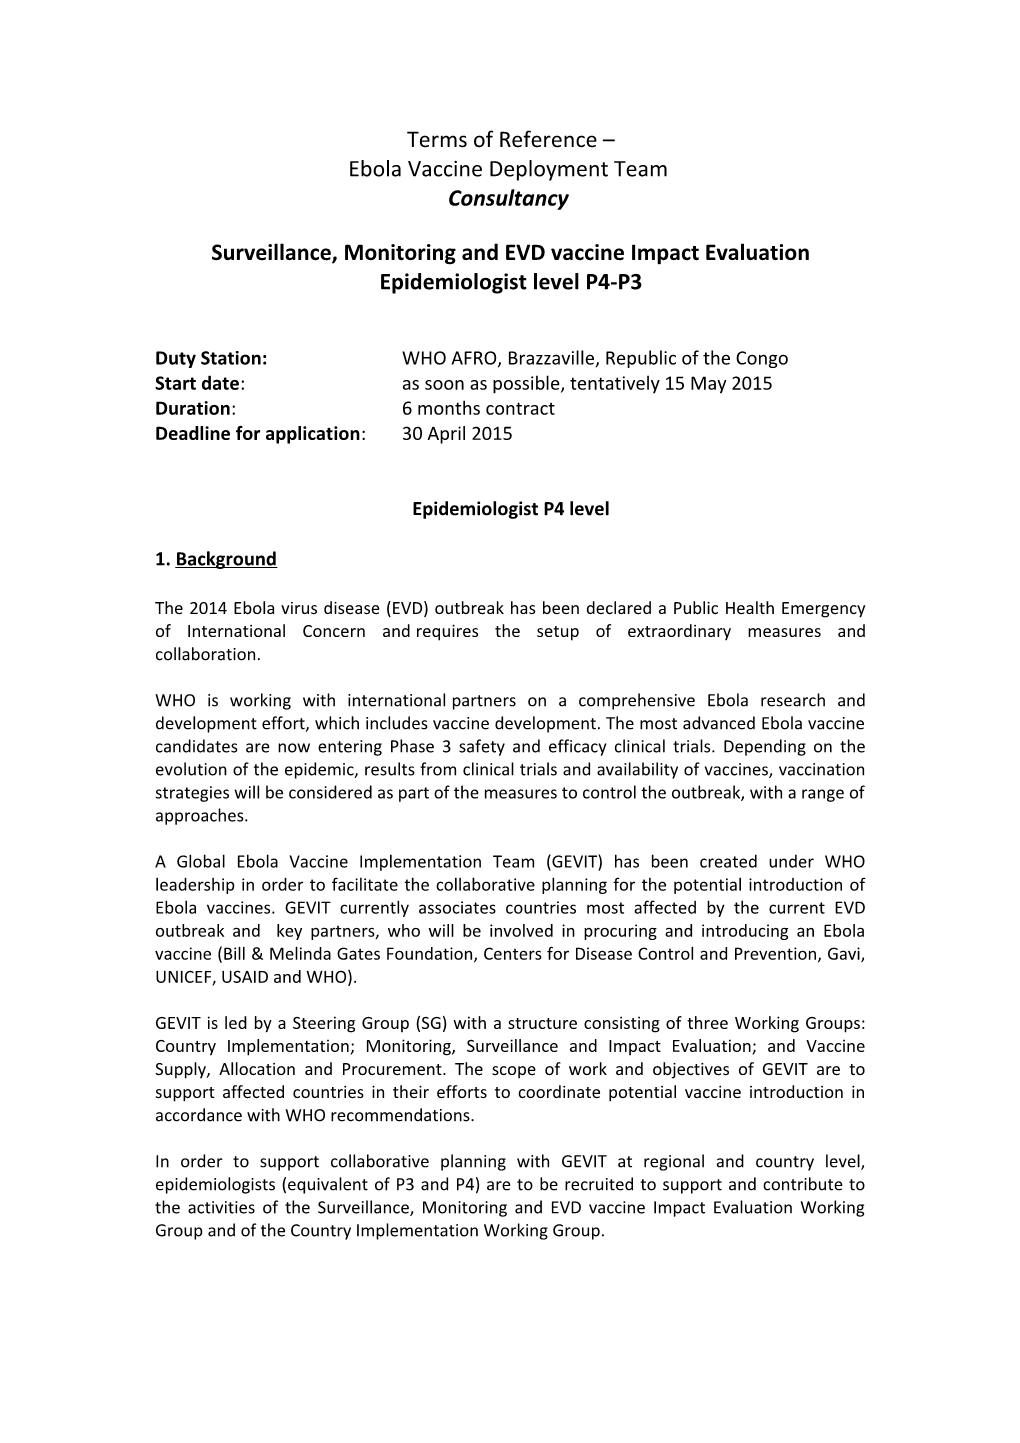 Surveillance, Monitoring and EVD Vaccine Impact Evaluation Epidemiologist Level P4-P3